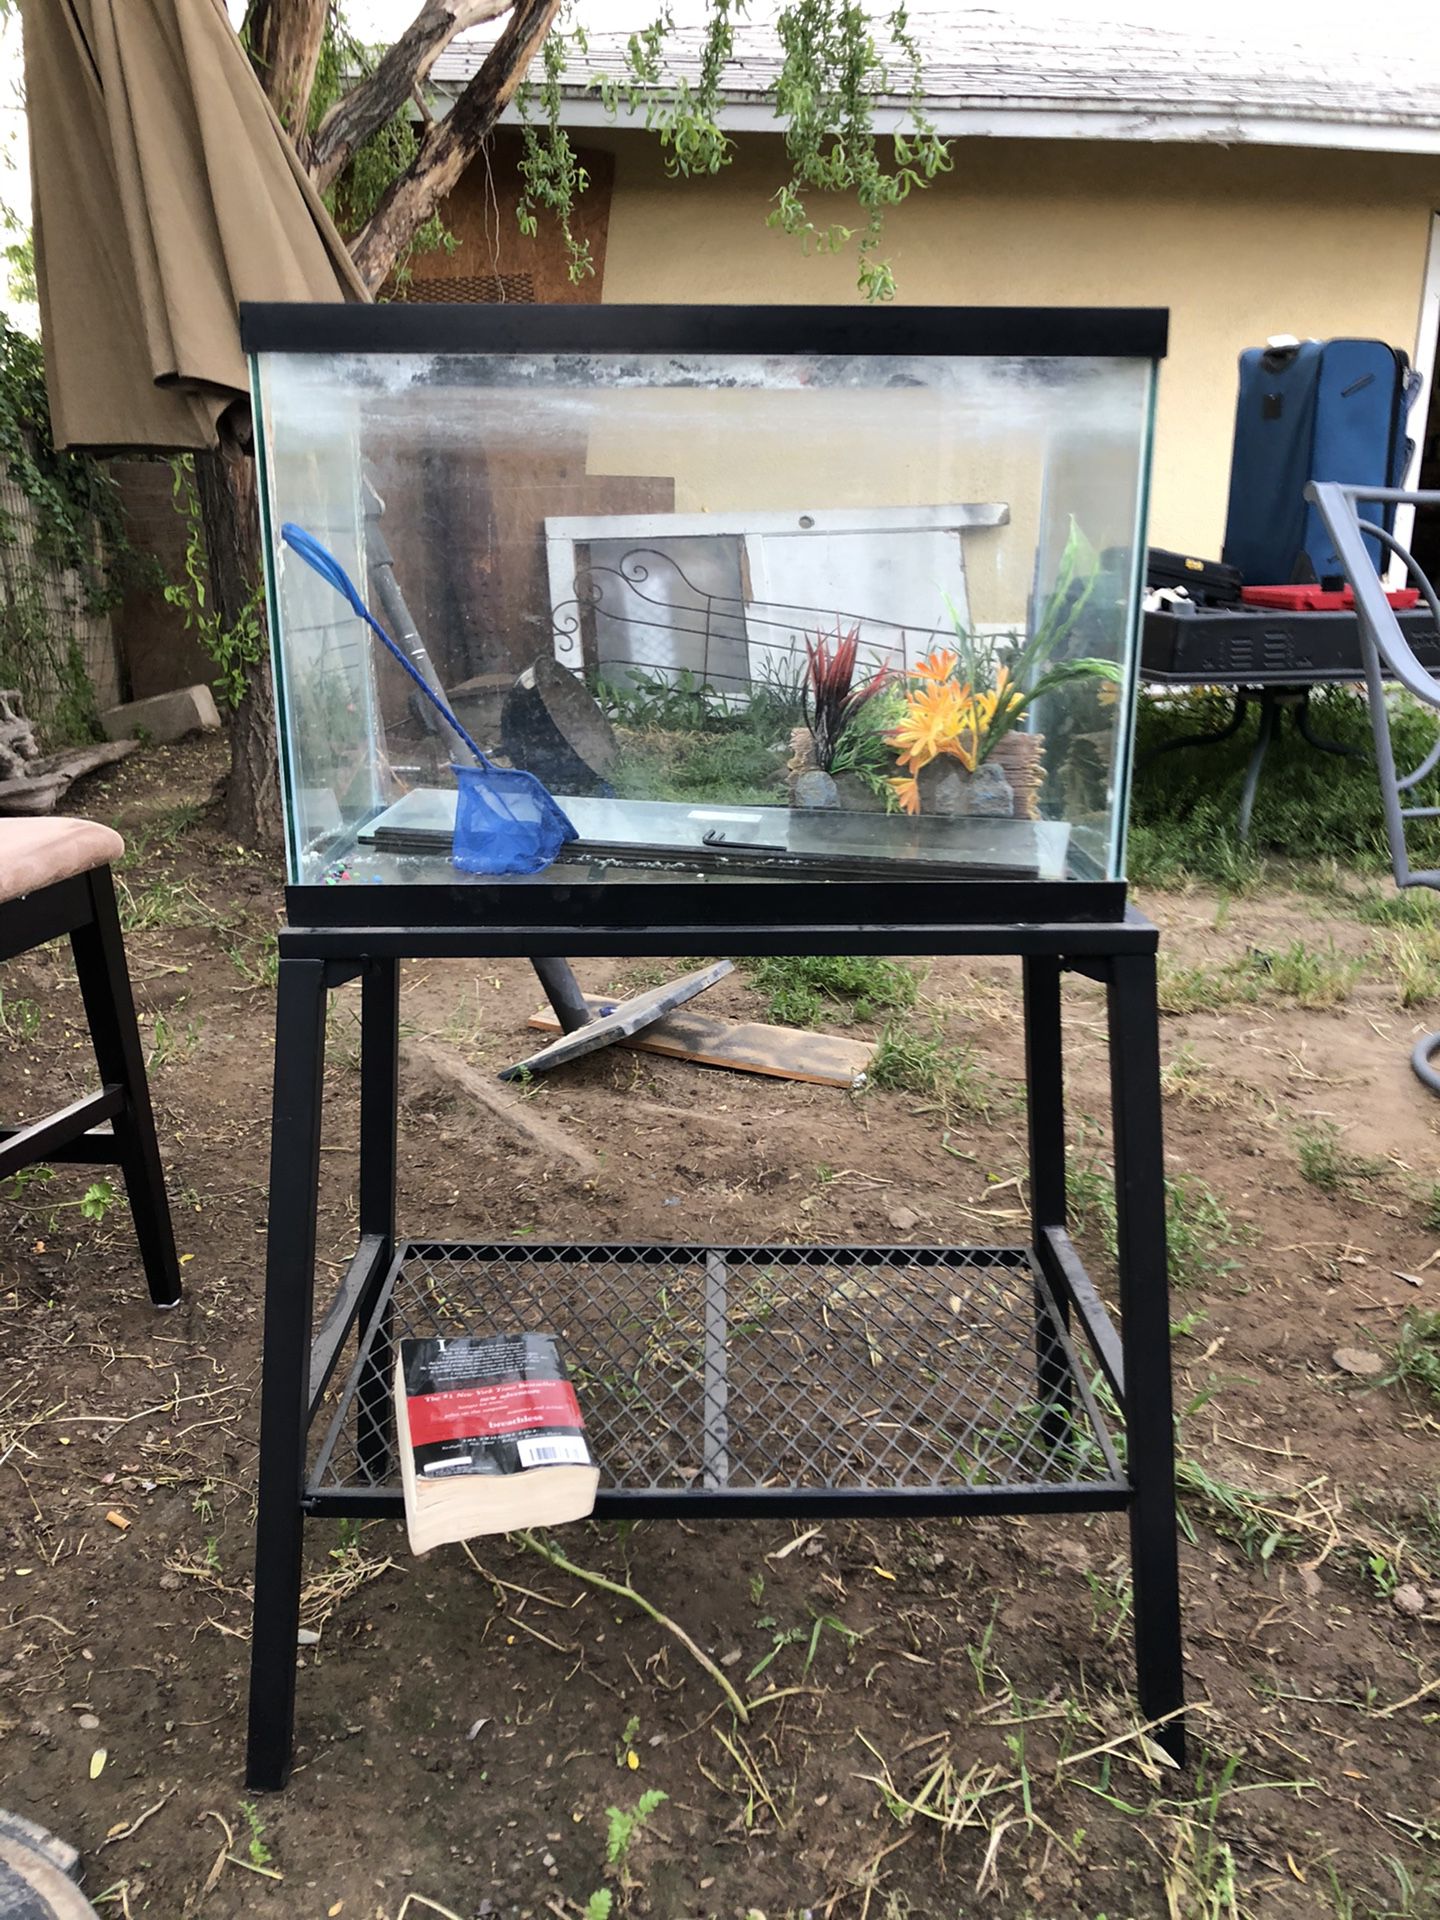 Fish tank and equipment